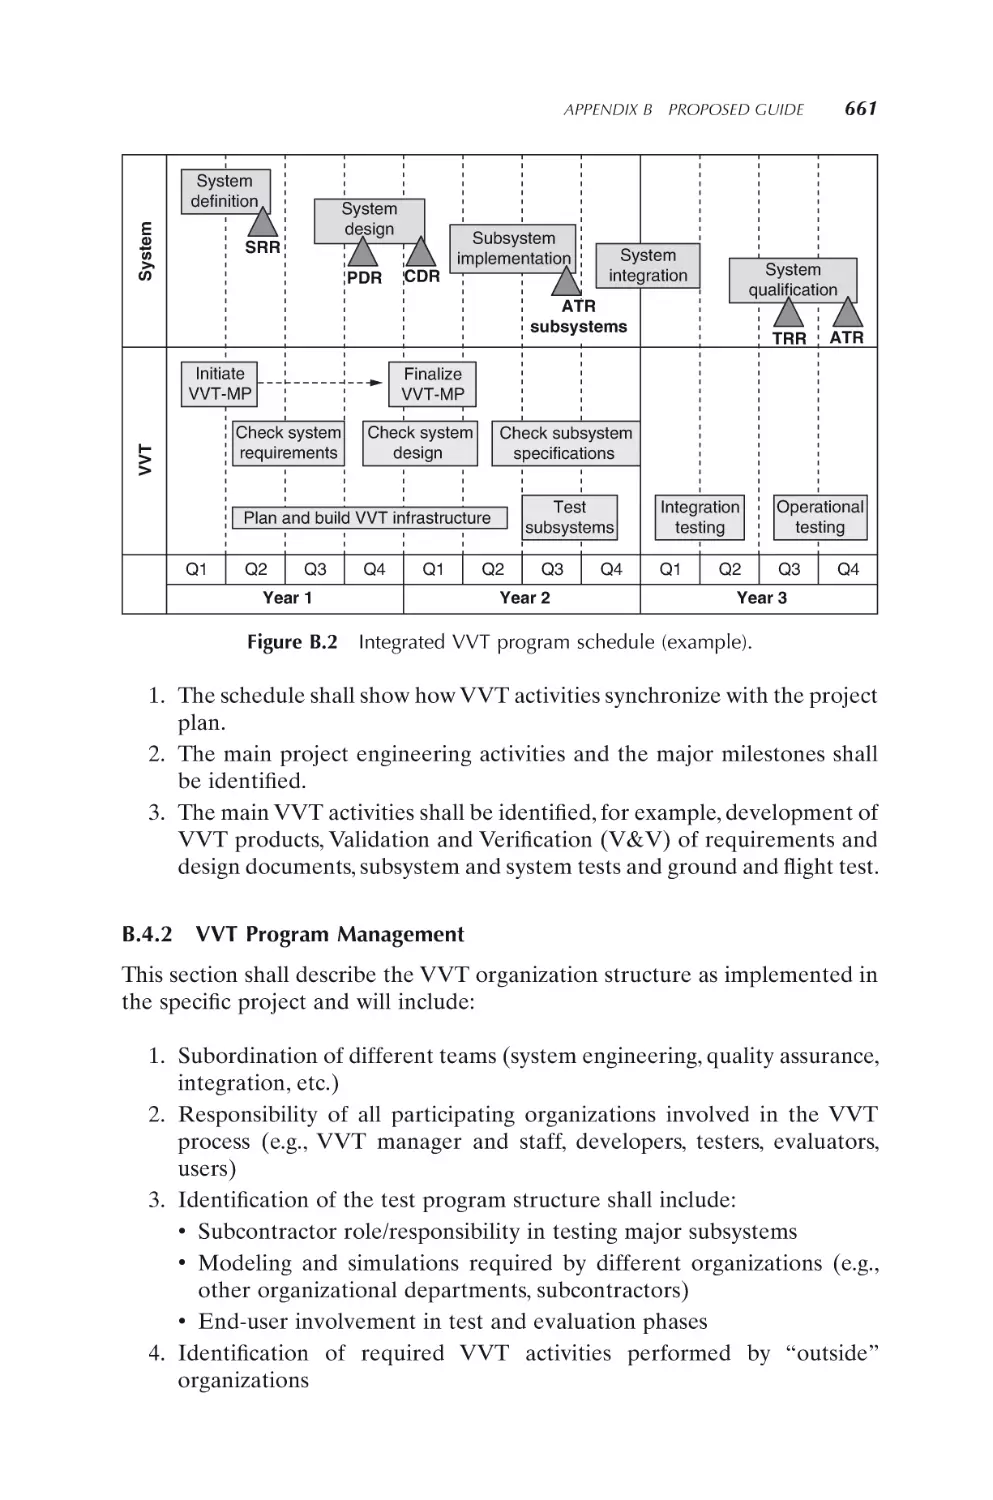 B.4.2 VVT Program Management